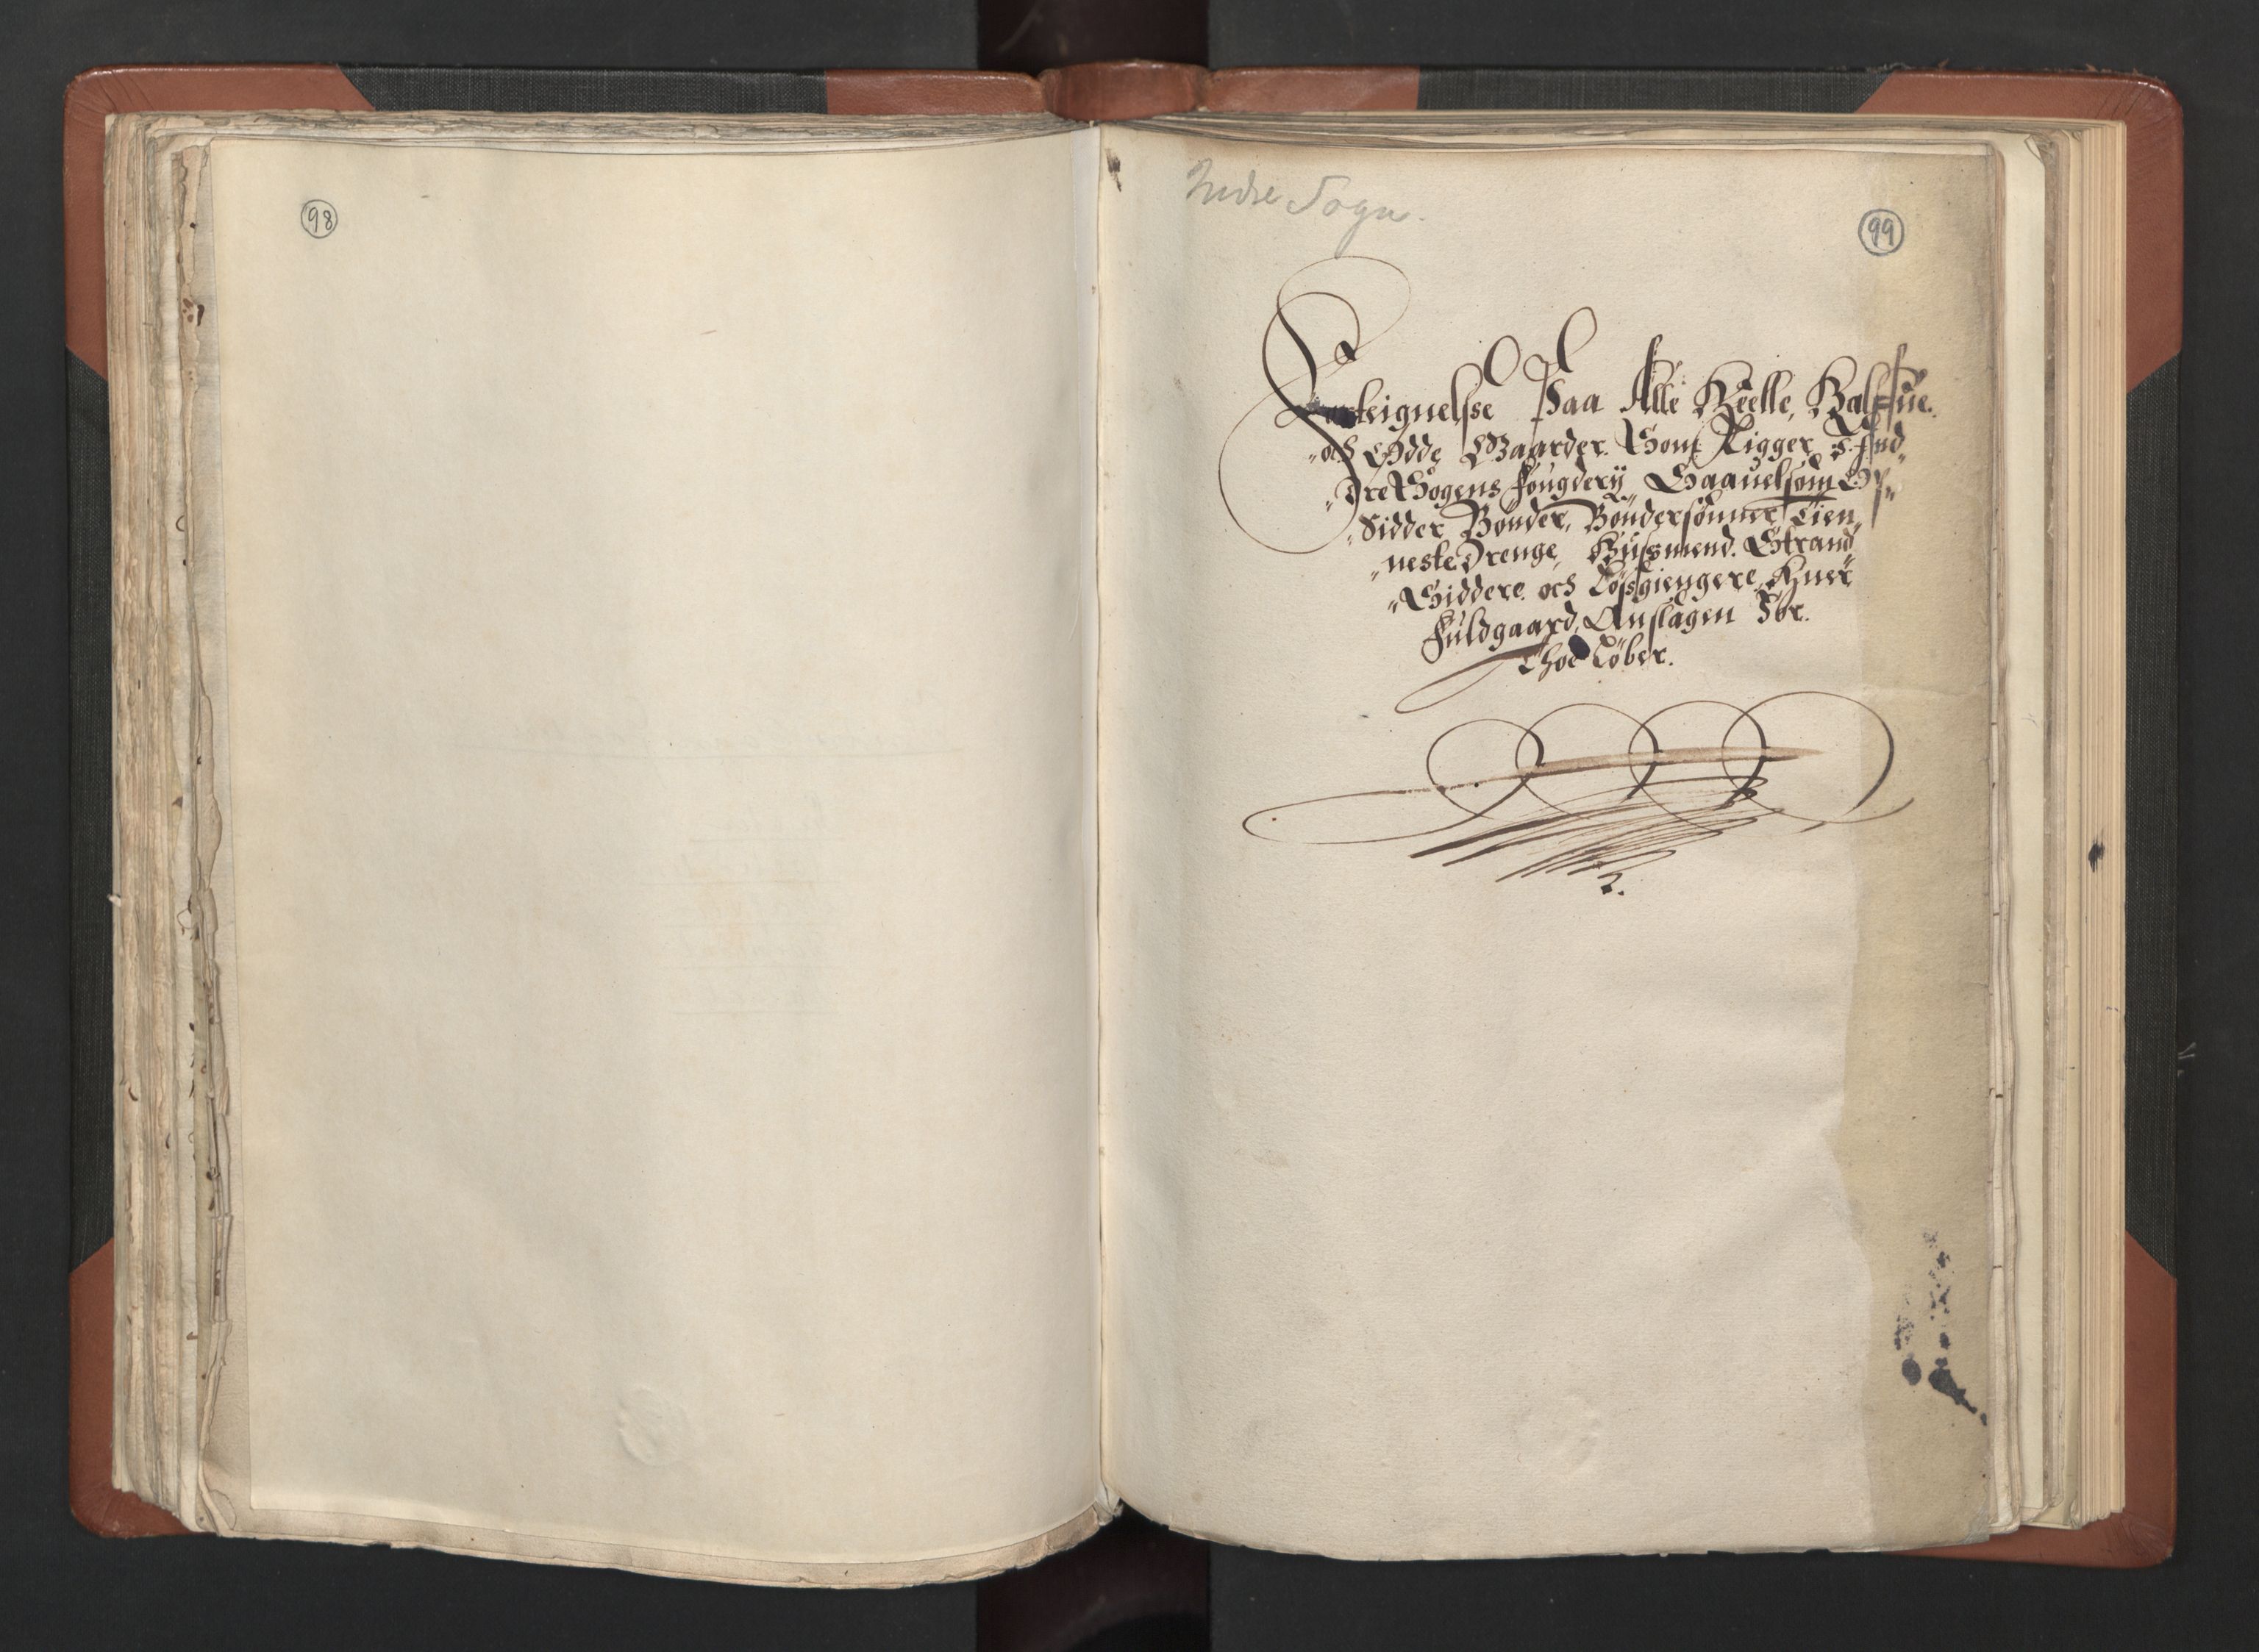 RA, Fogdenes og sorenskrivernes manntall 1664-1666, nr. 14: Hardanger len, Ytre Sogn fogderi og Indre Sogn fogderi, 1664-1665, s. 98-99